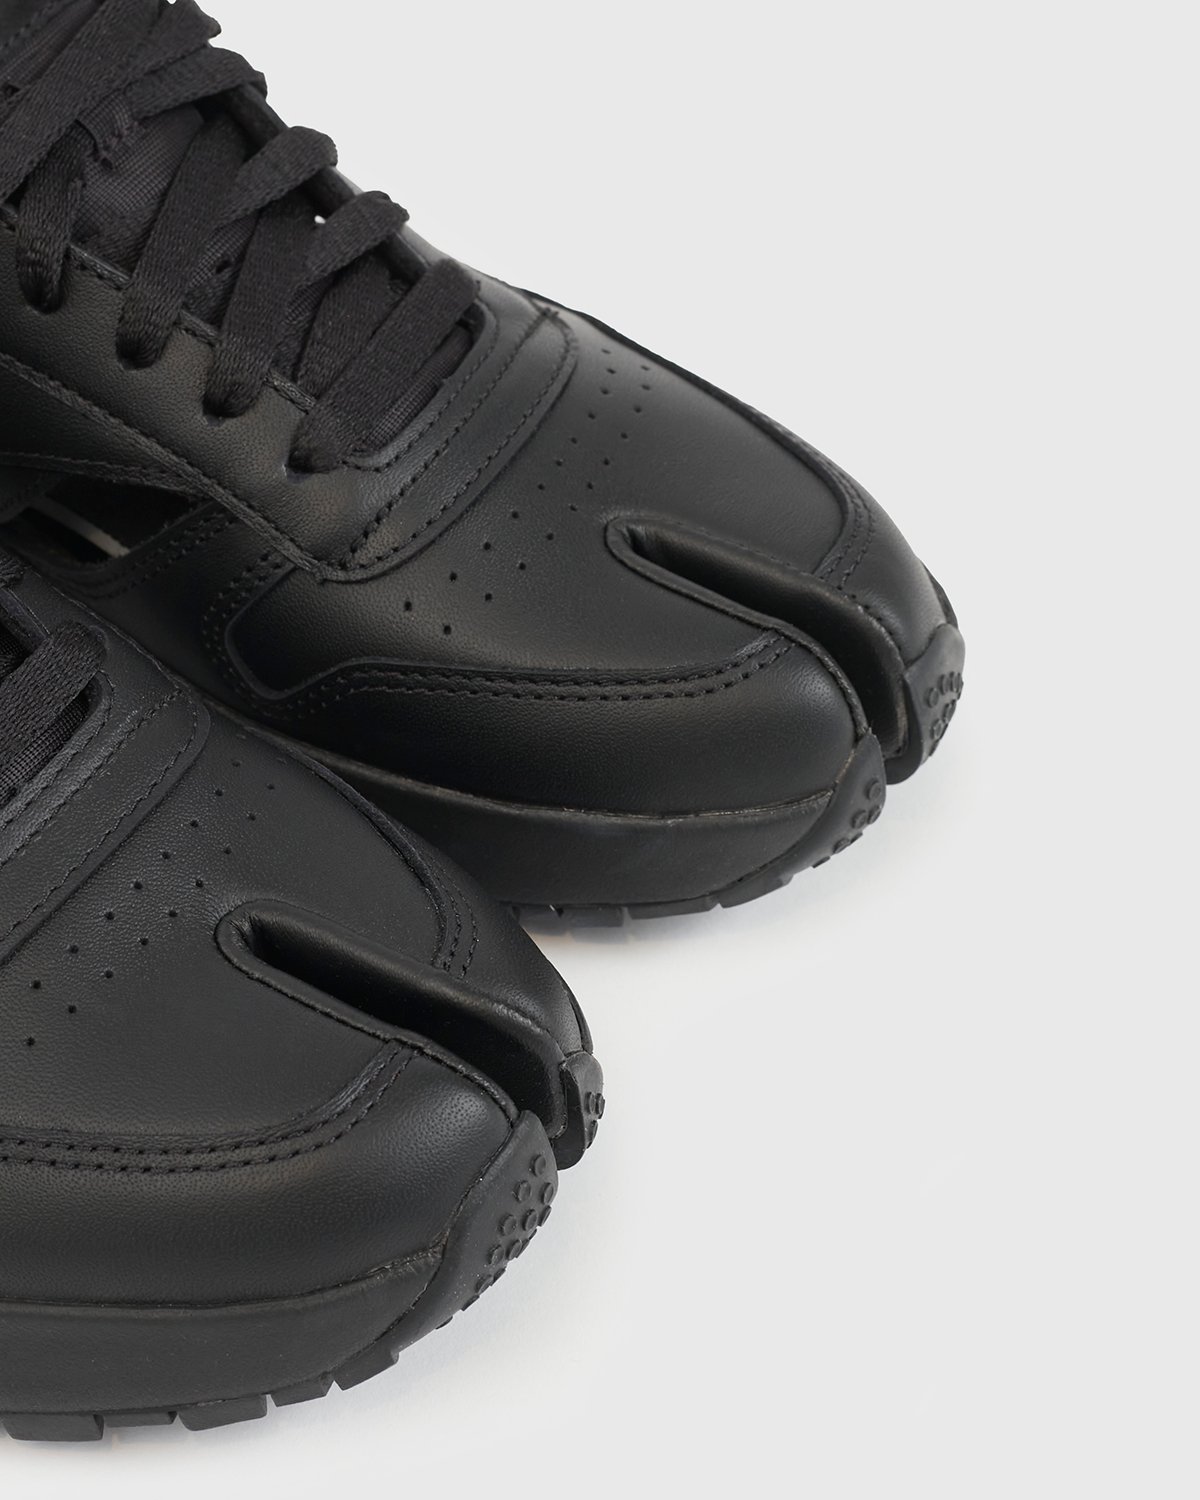 Maison Margiela x Reebok - Classic Leather Tabi Low Black - Footwear - Black - Image 4